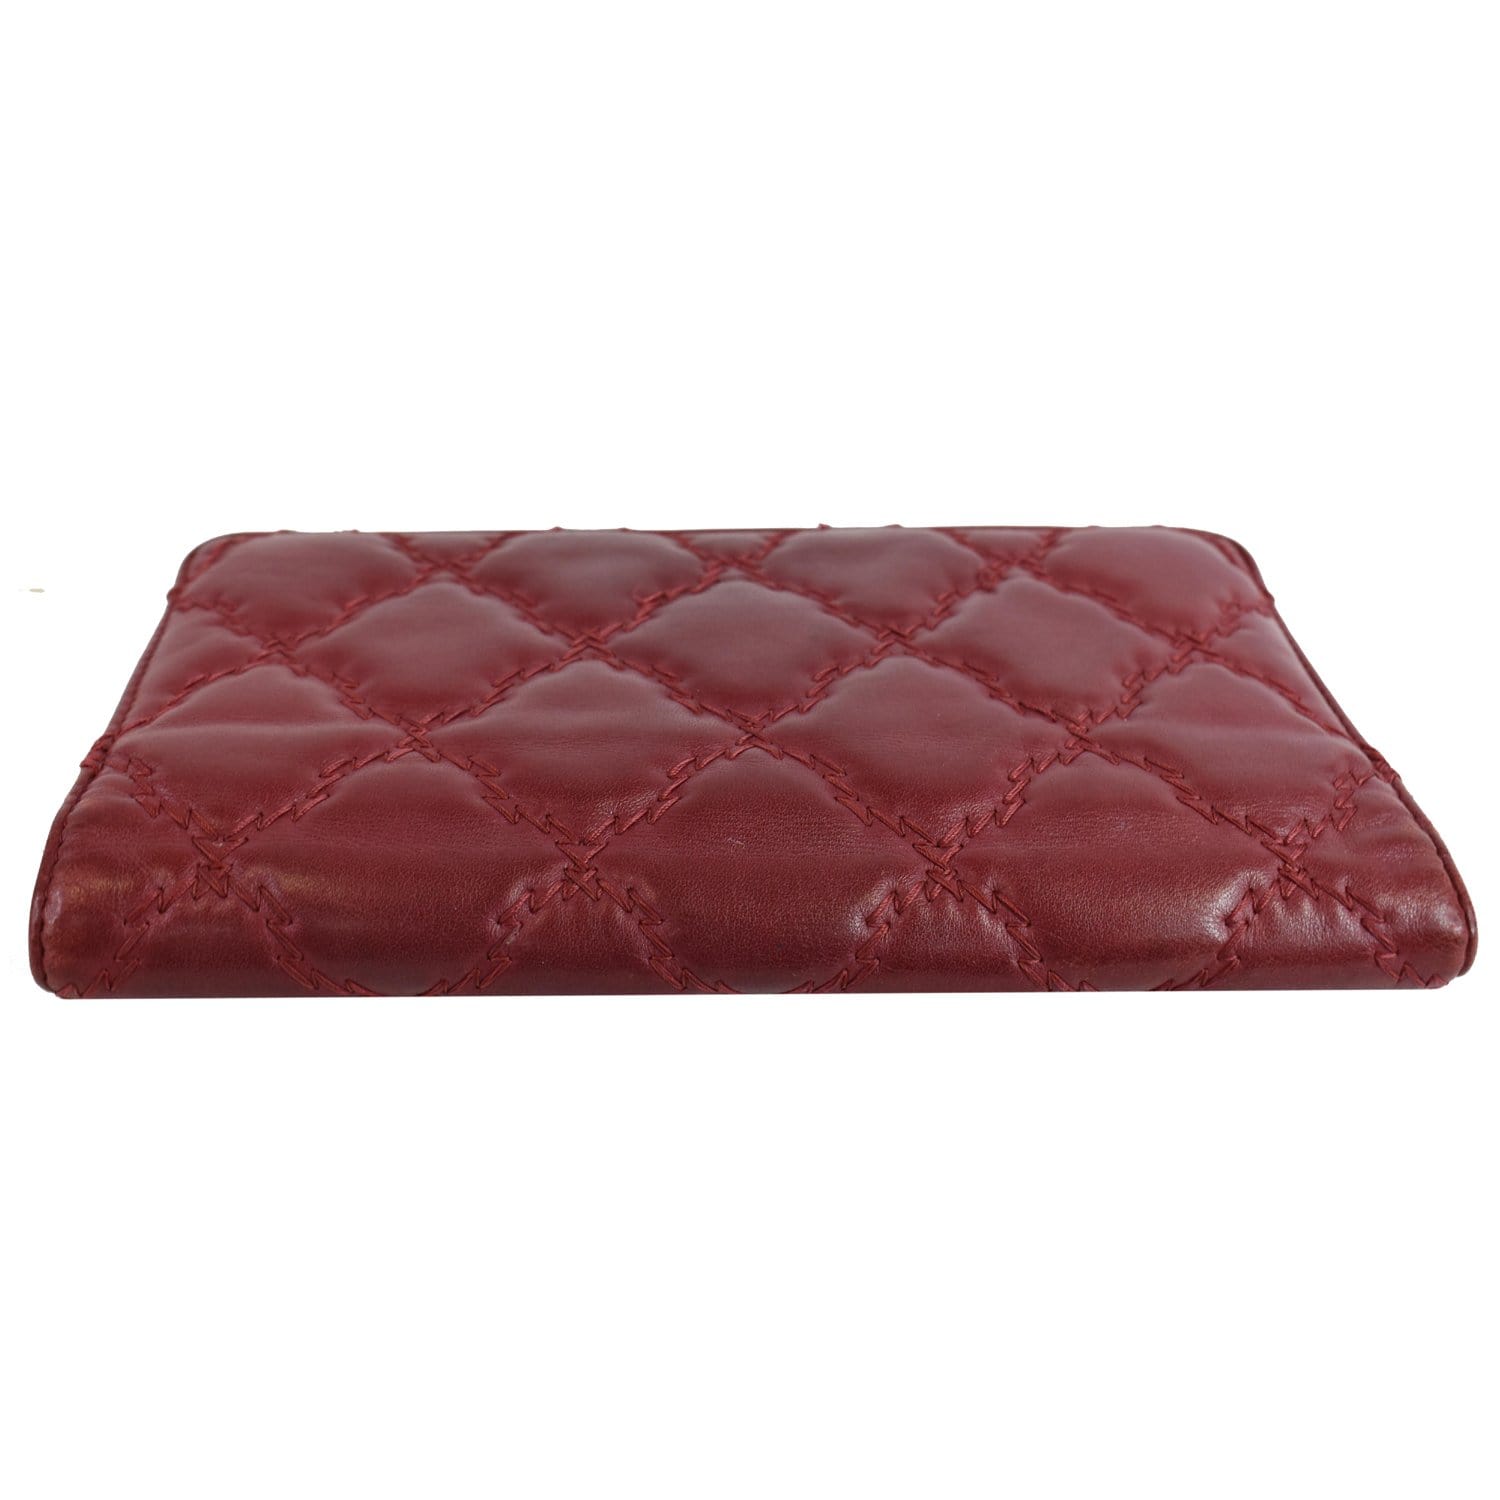 vintage chanel red wallet